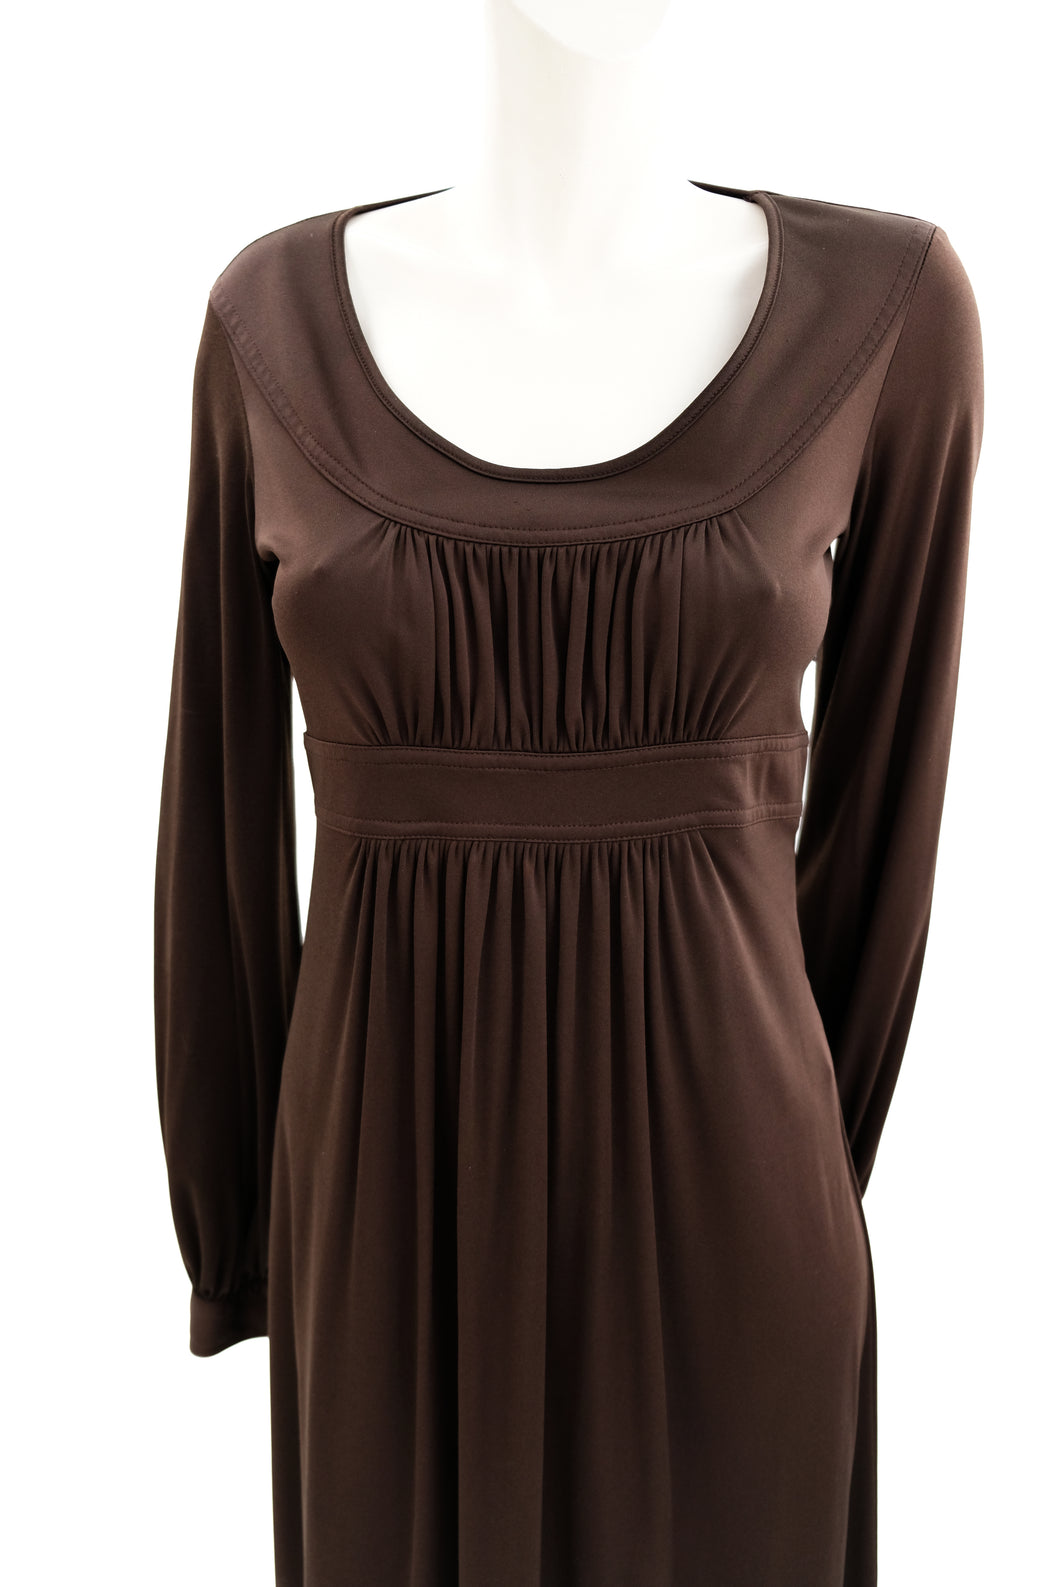 Michael Kors Brown Empire Line Dress, UK10 – Menage Modern Vintage